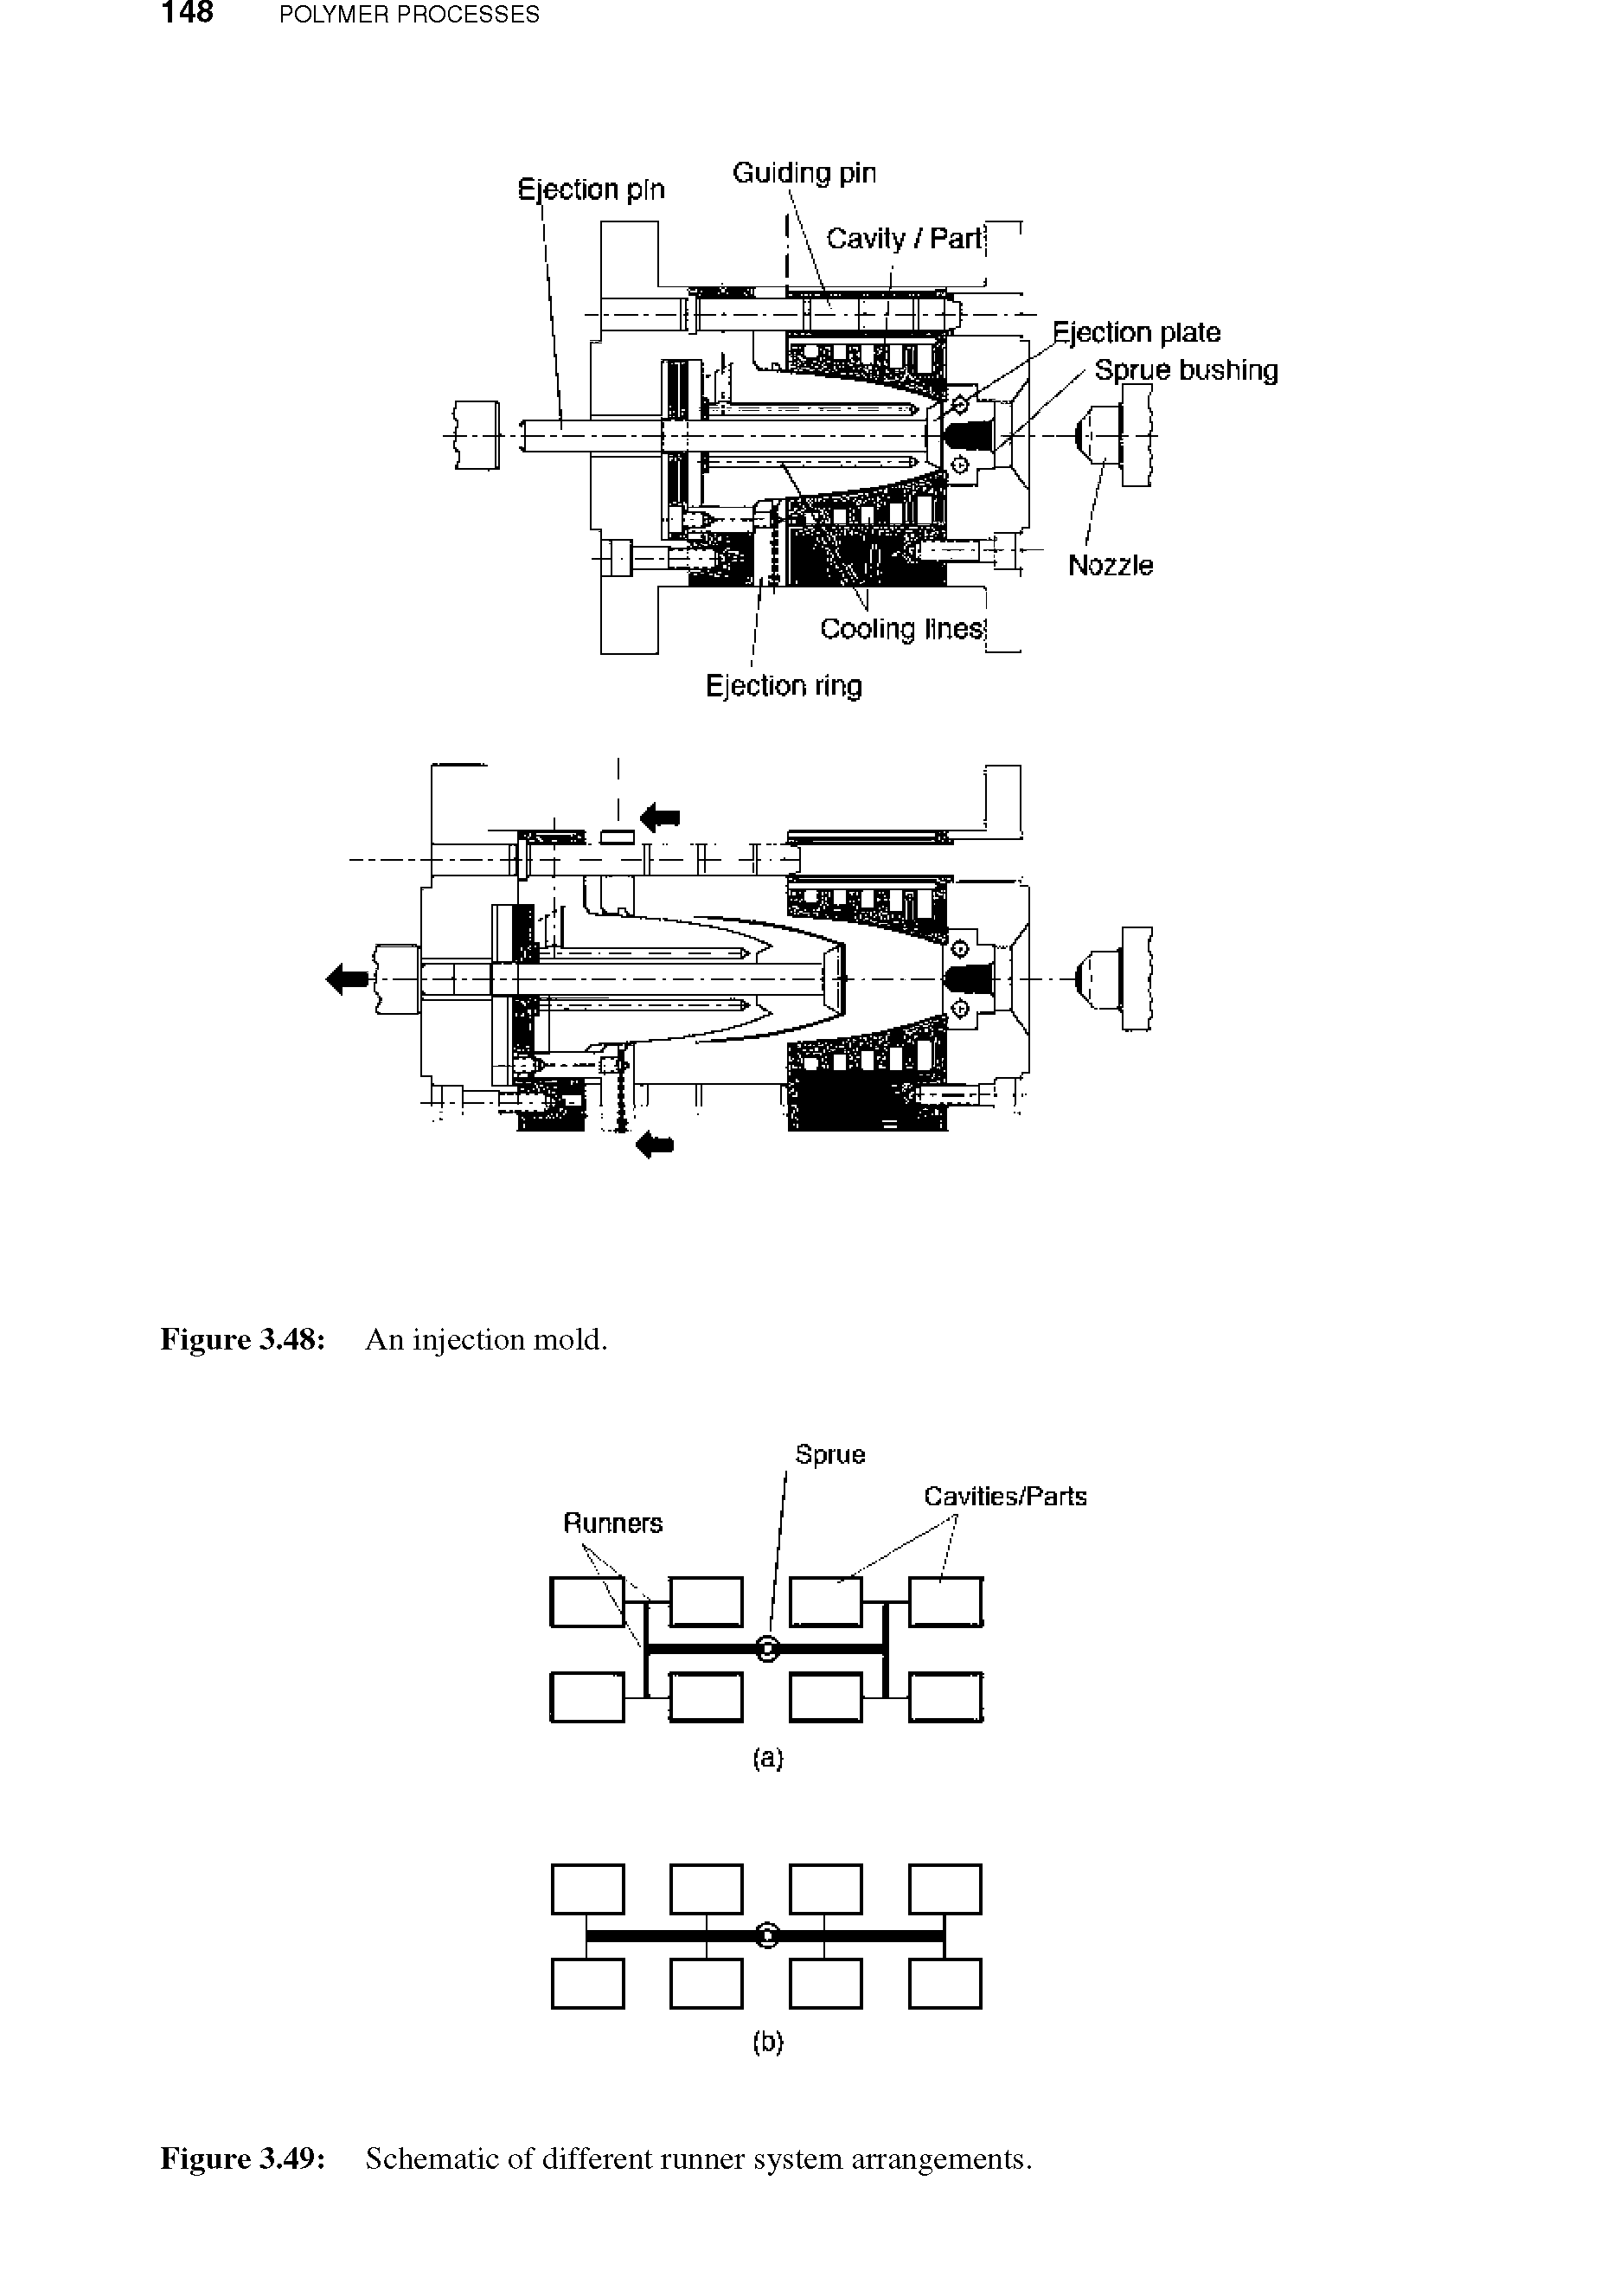 Figure 3.49 Schematic of different runner system arrangements.